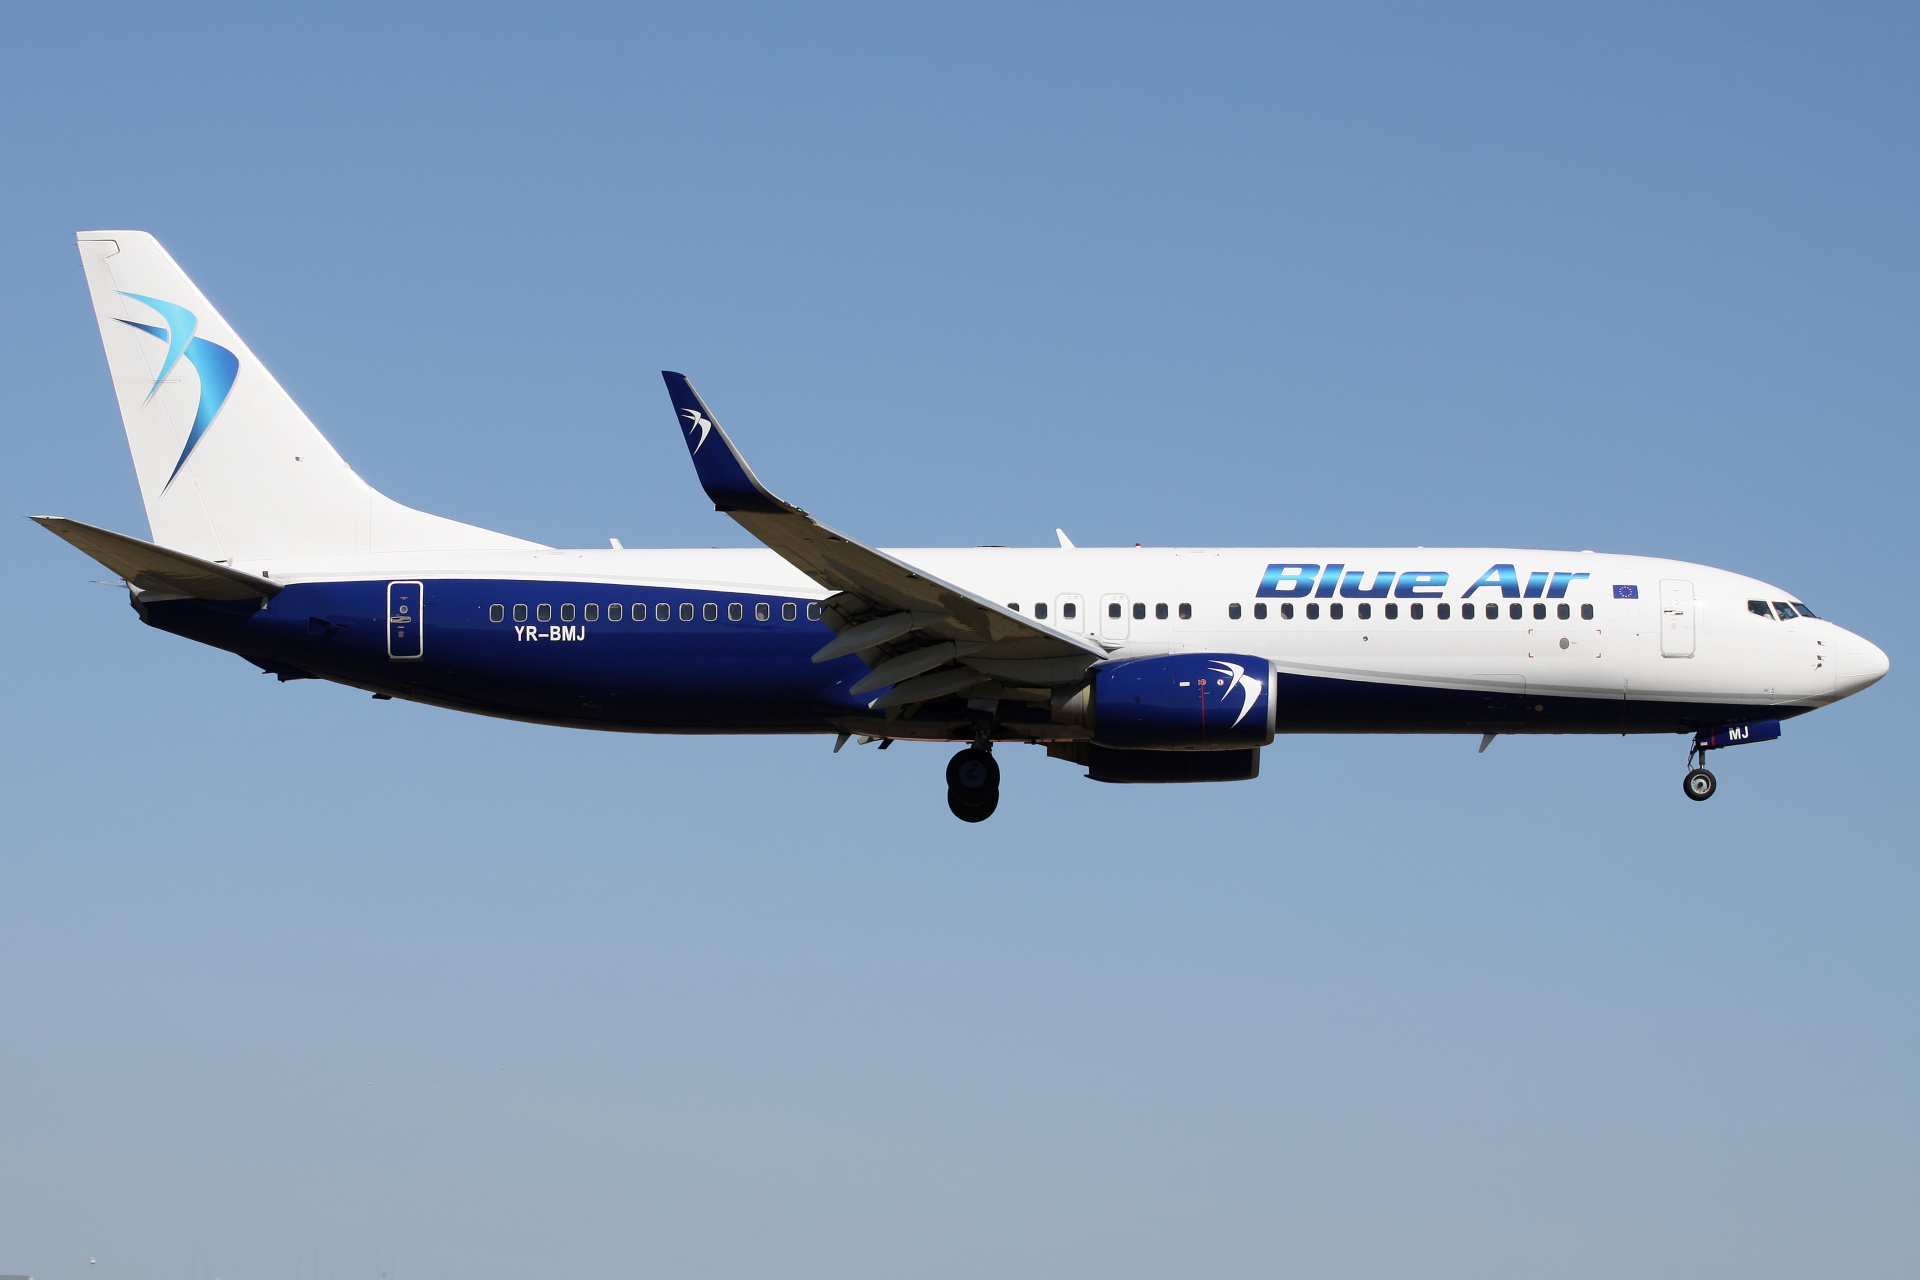 YR-BMJ (Aircraft » EPWA Spotting » Boeing 737-800 » Blue Air)